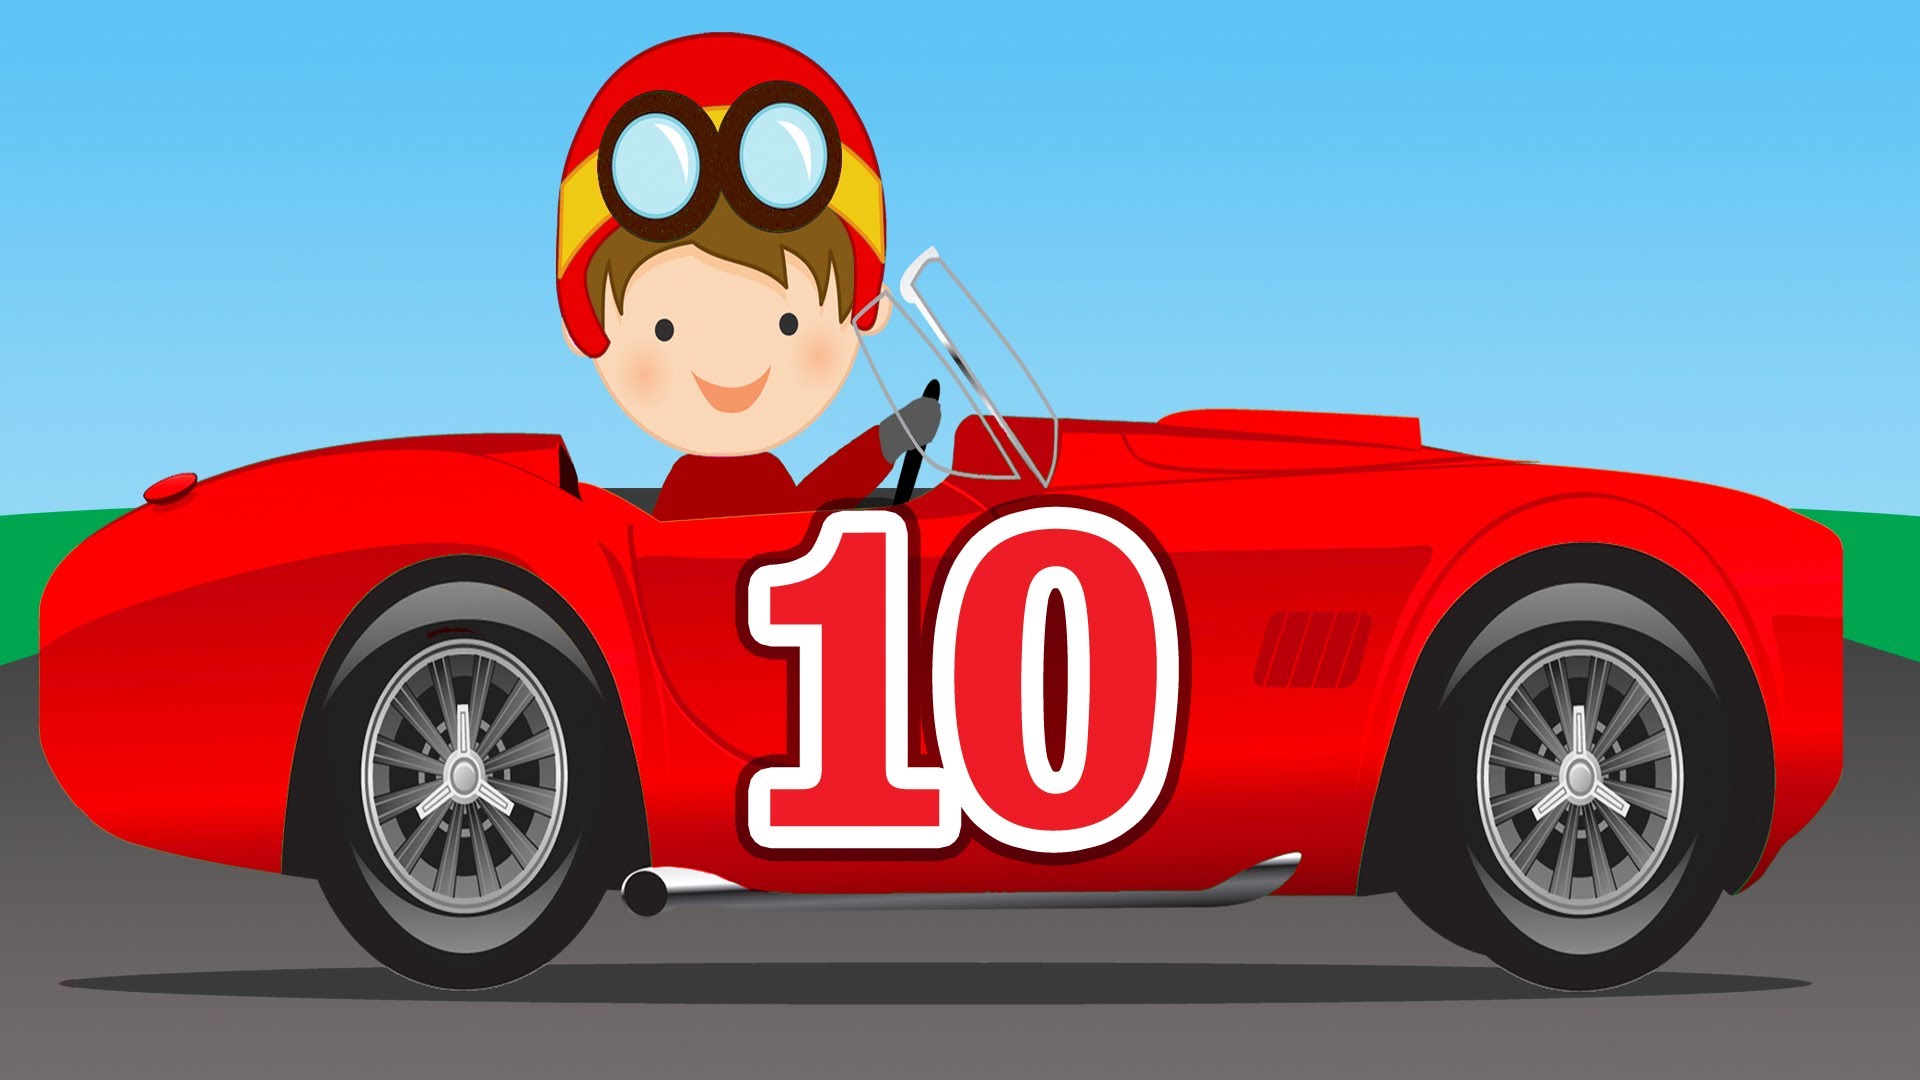 Free Pics Of Cartoon Racing Cars, Download Free Pics Of Cartoon Racing